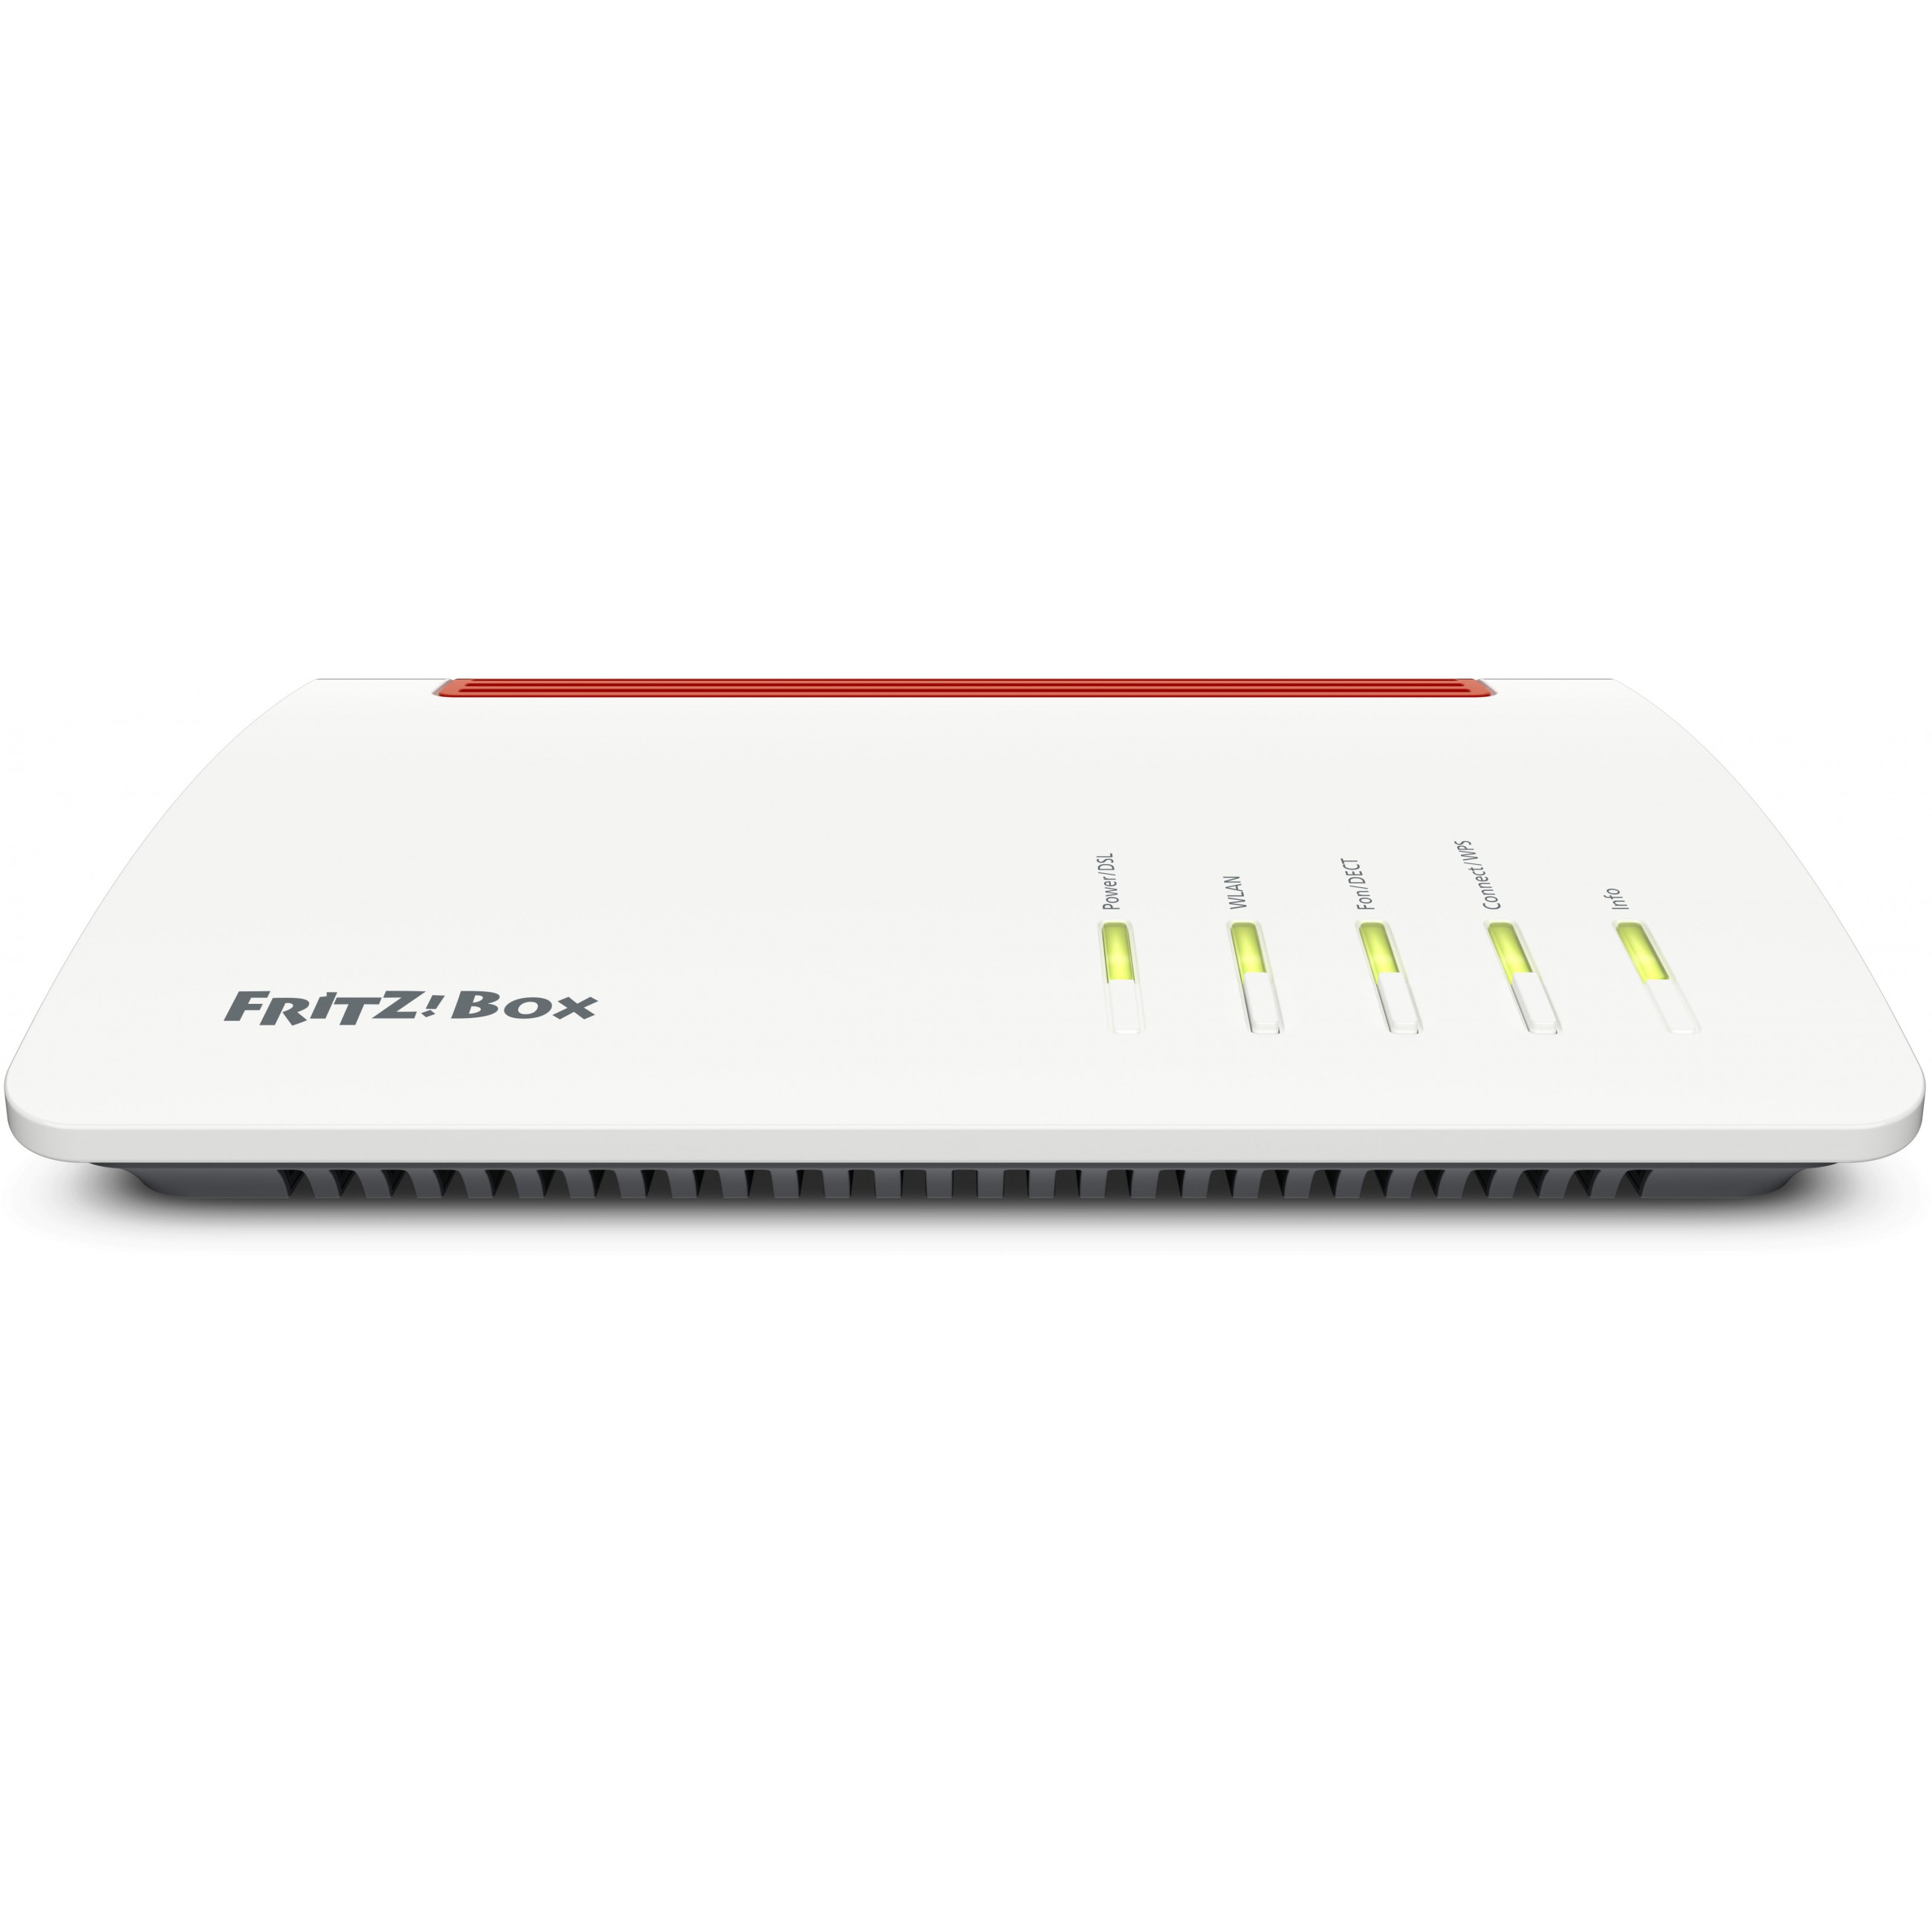 FRITZ!Box 7590 wireless router